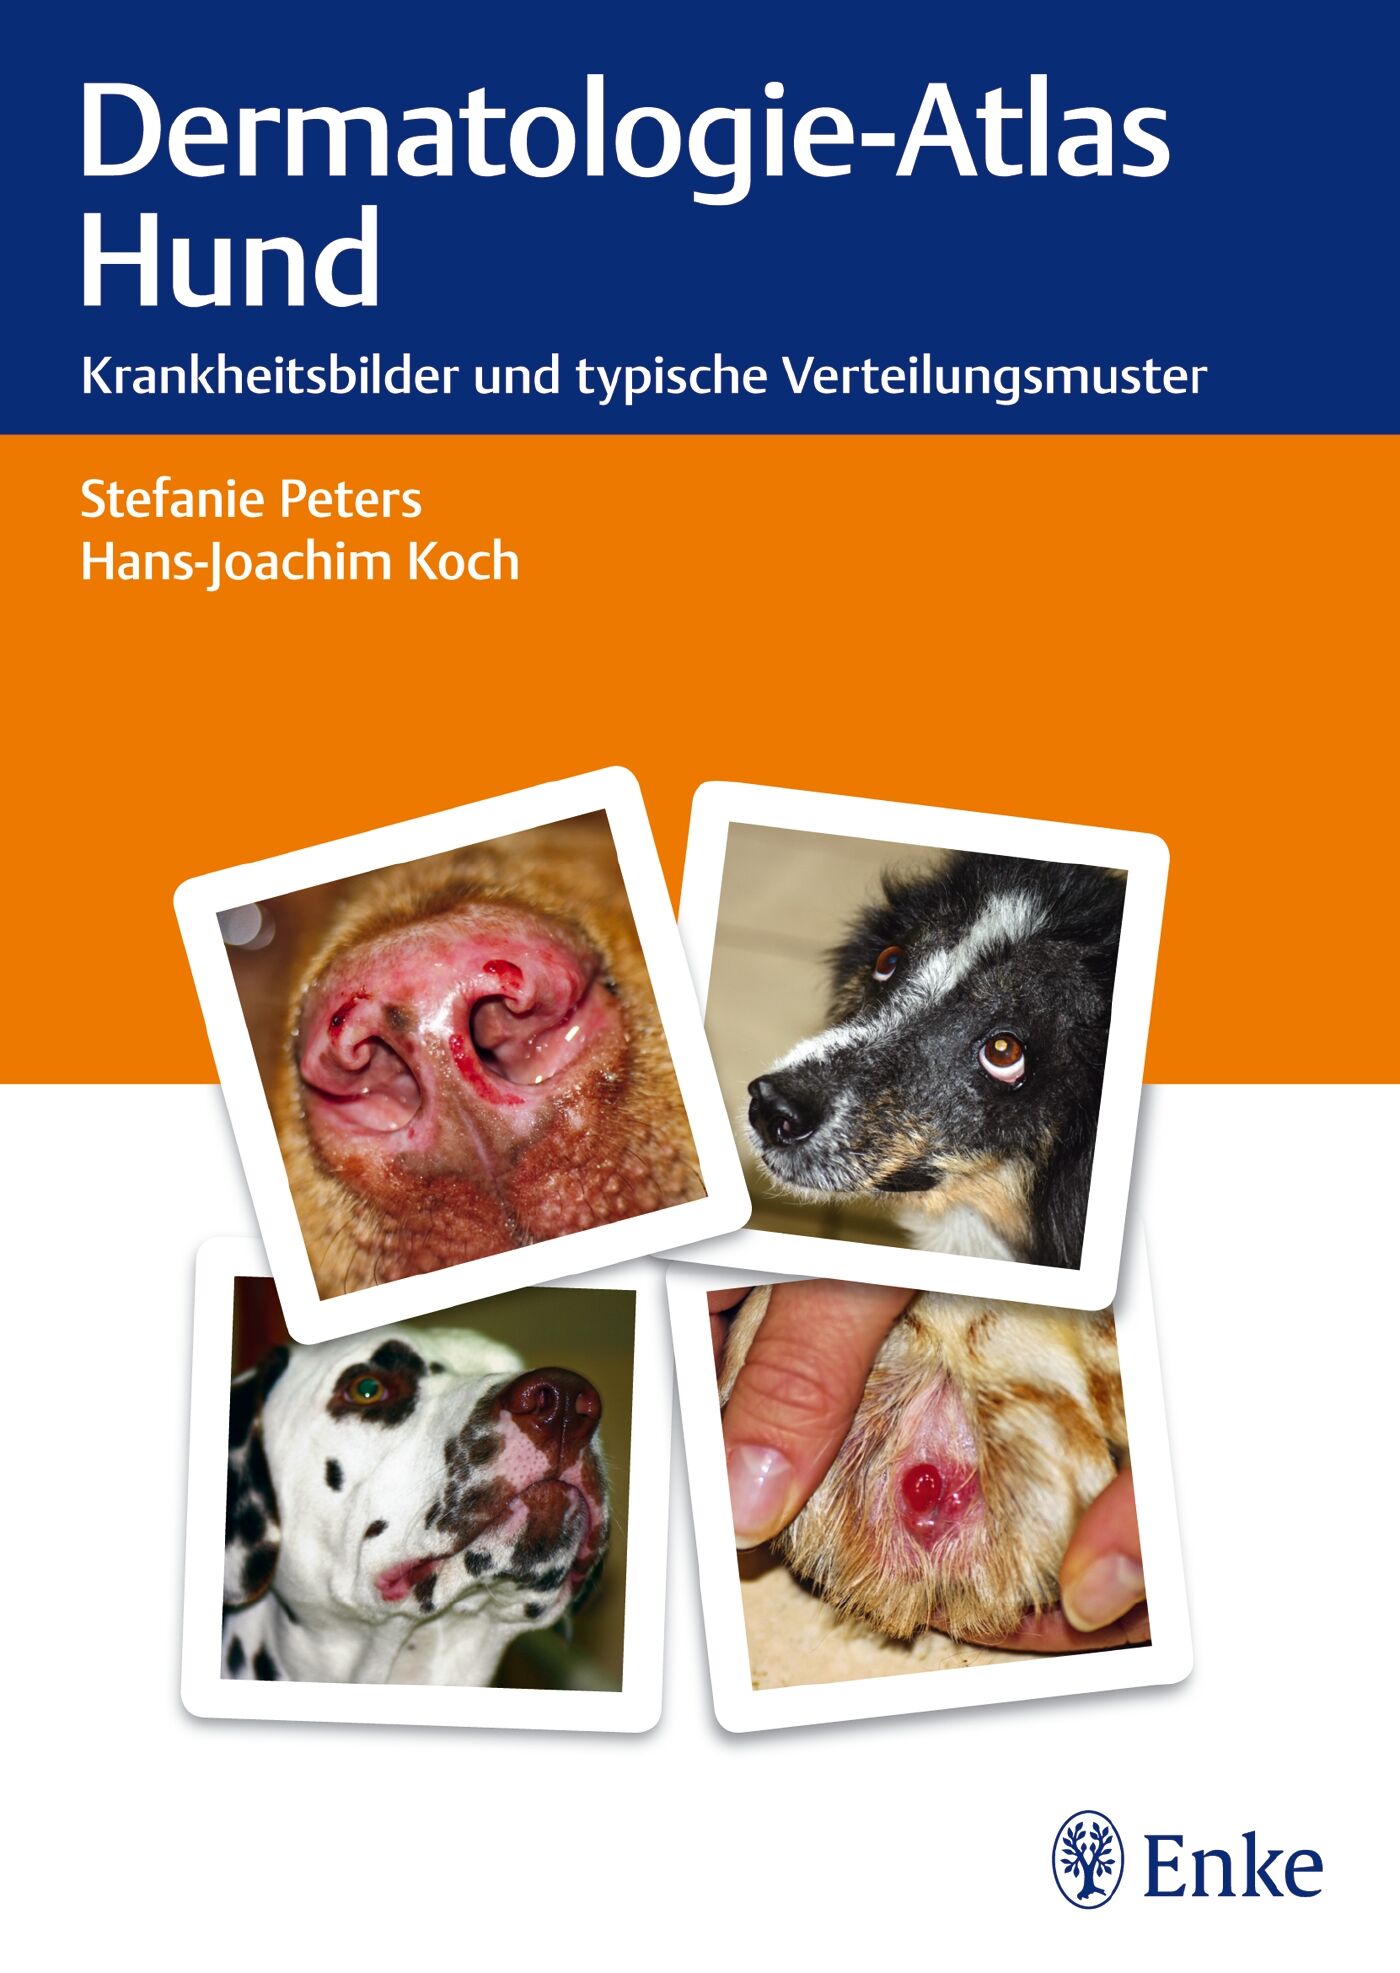 Dermatologie-Atlas Hund, 9783830411673